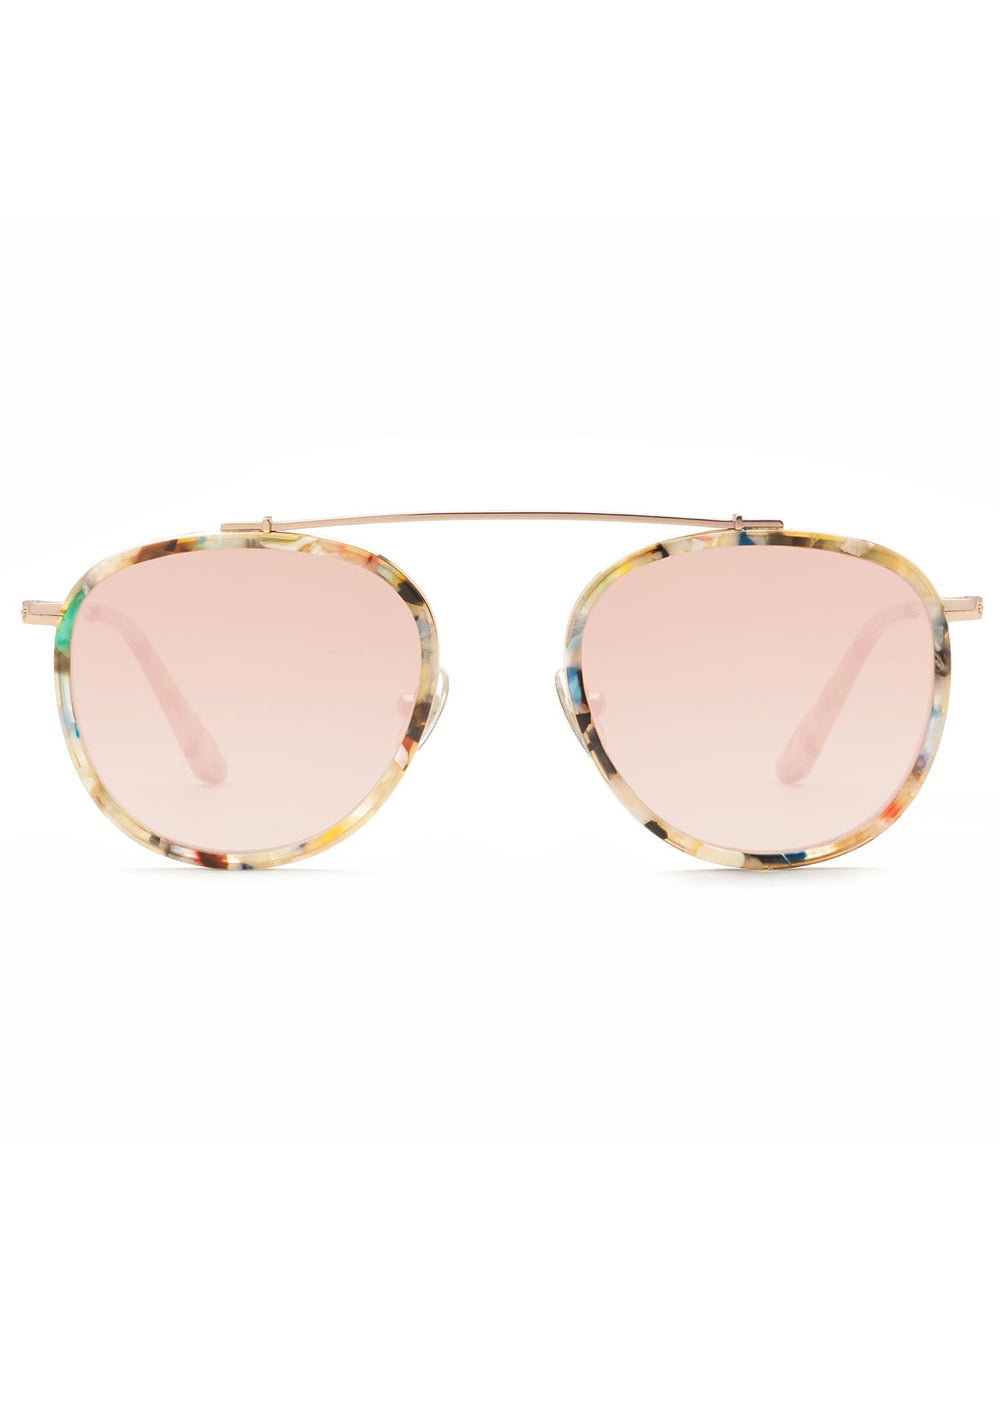 KREWE - CHARTRES | Gelato 18K Rose Mirrored Handcrafted, luxury multicolored acetate aviator sunglasses